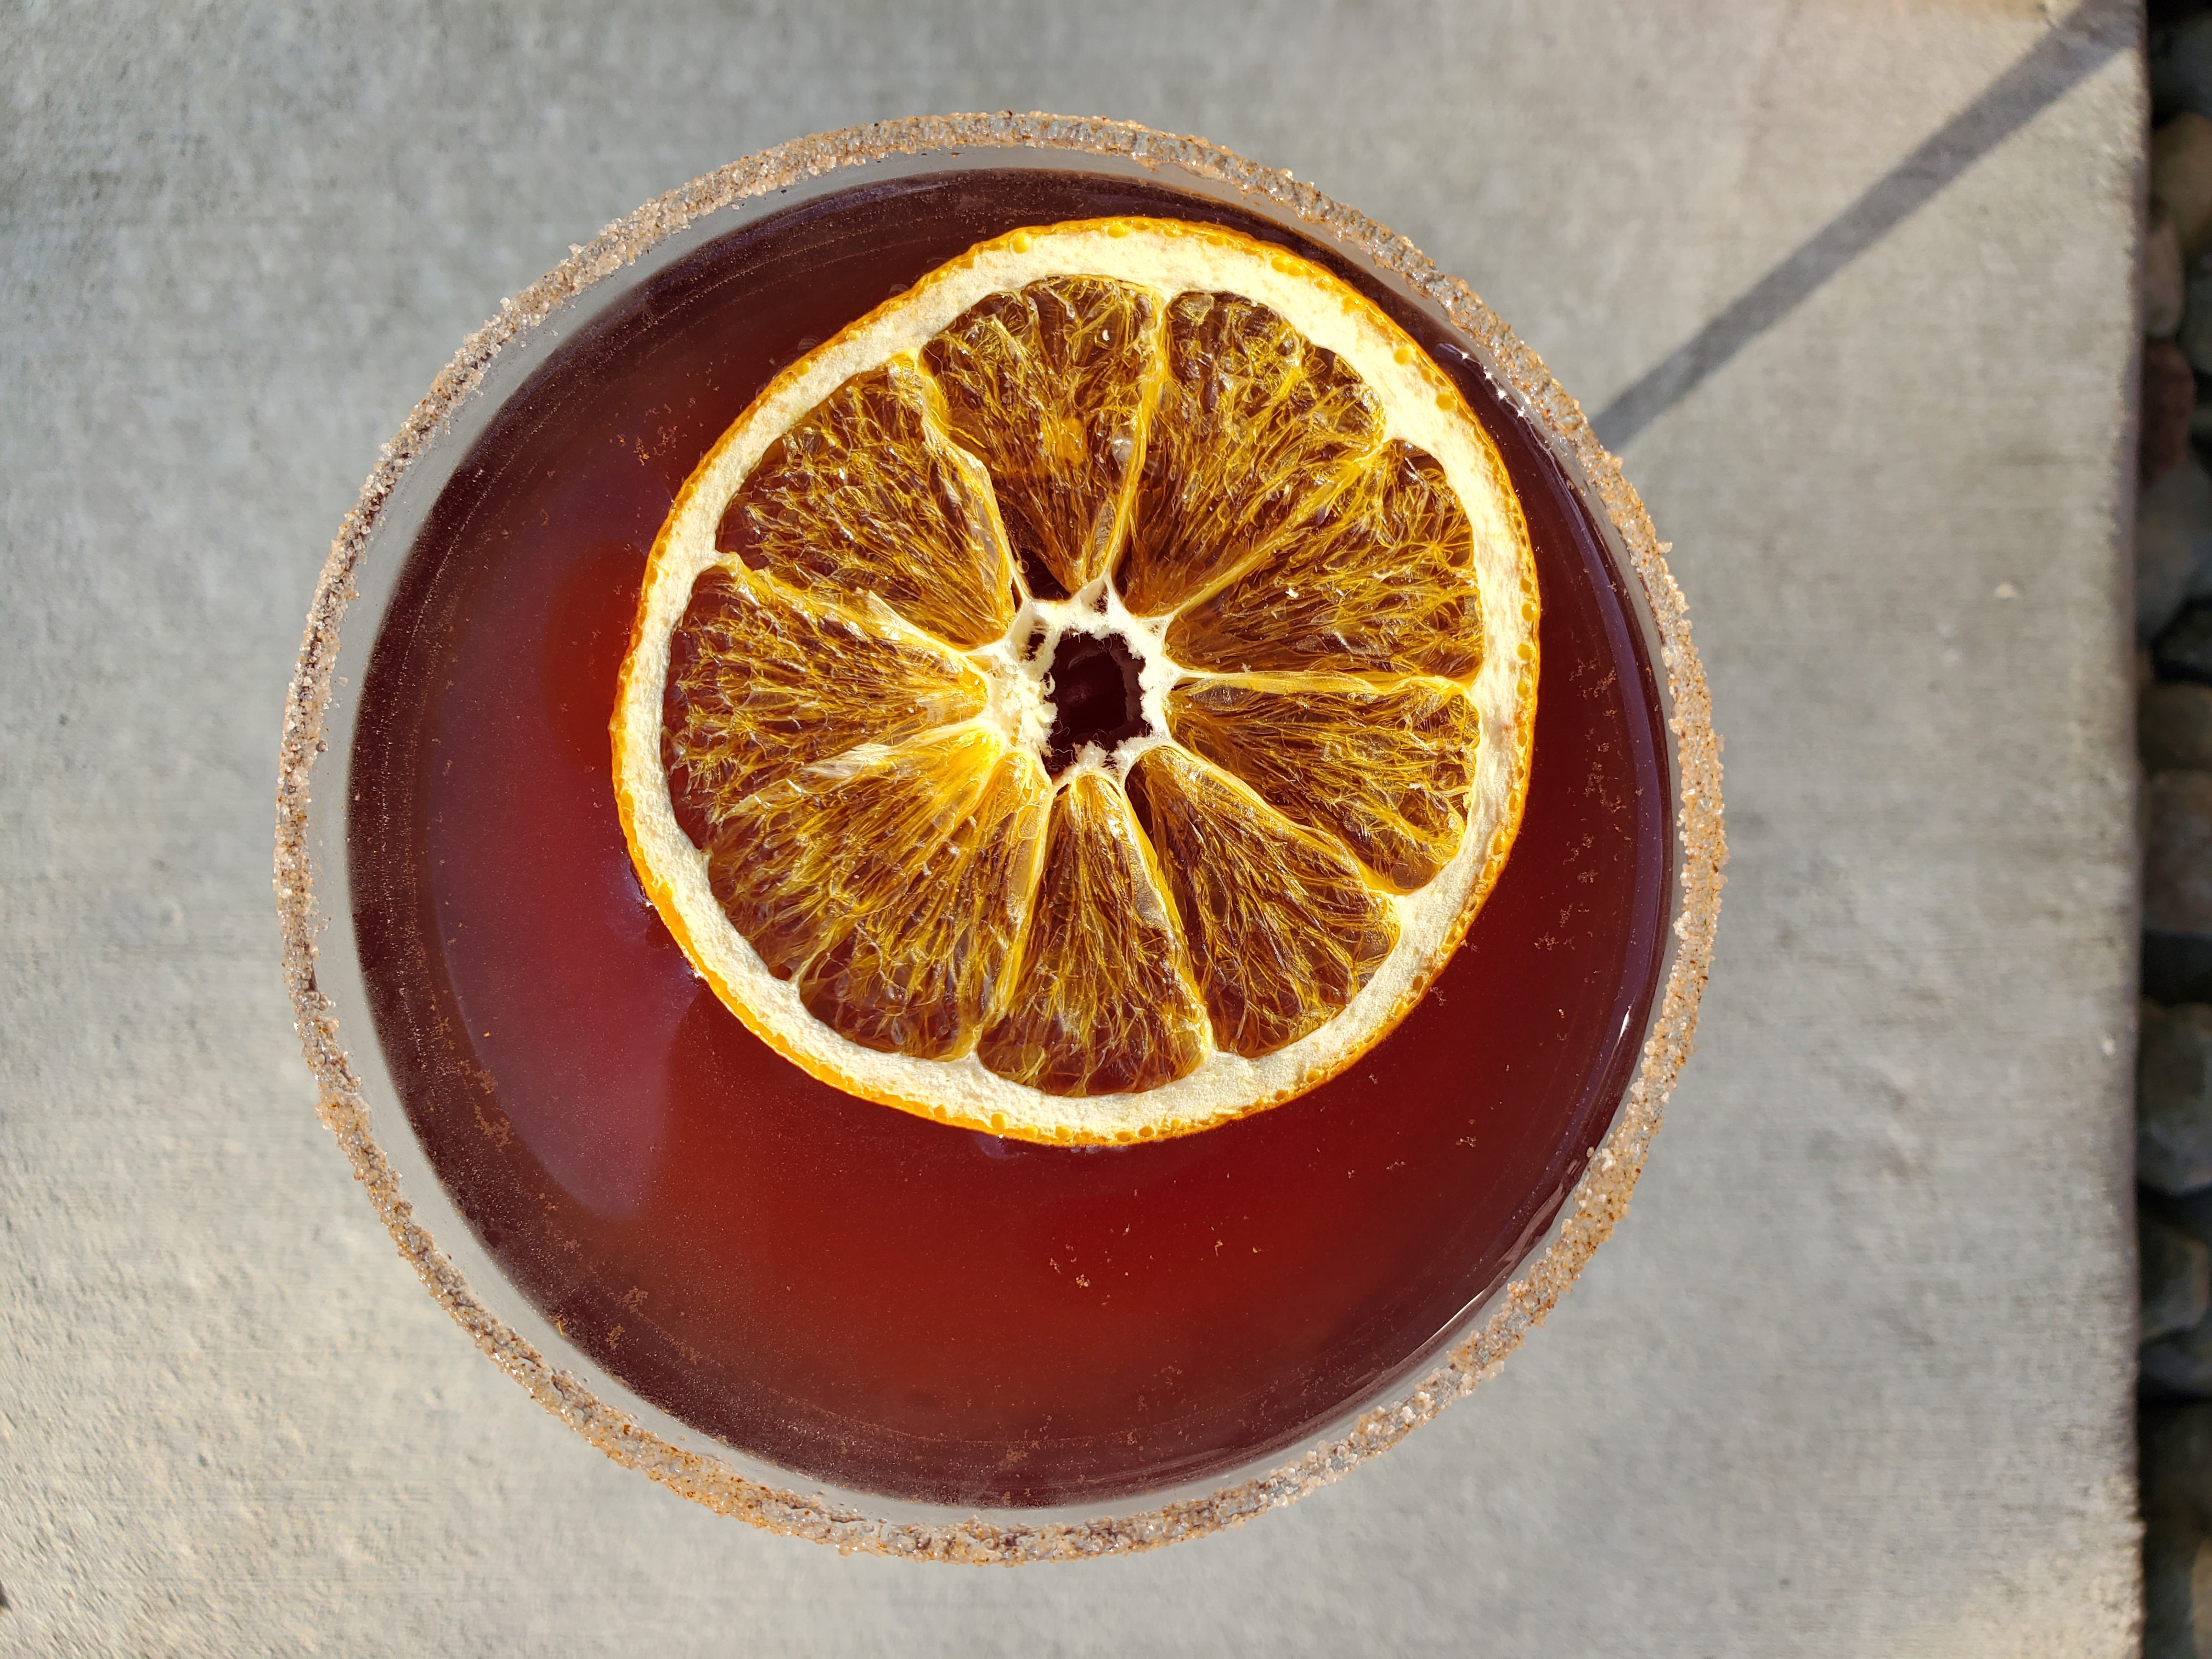 Drink with dried orange slice garnish on top